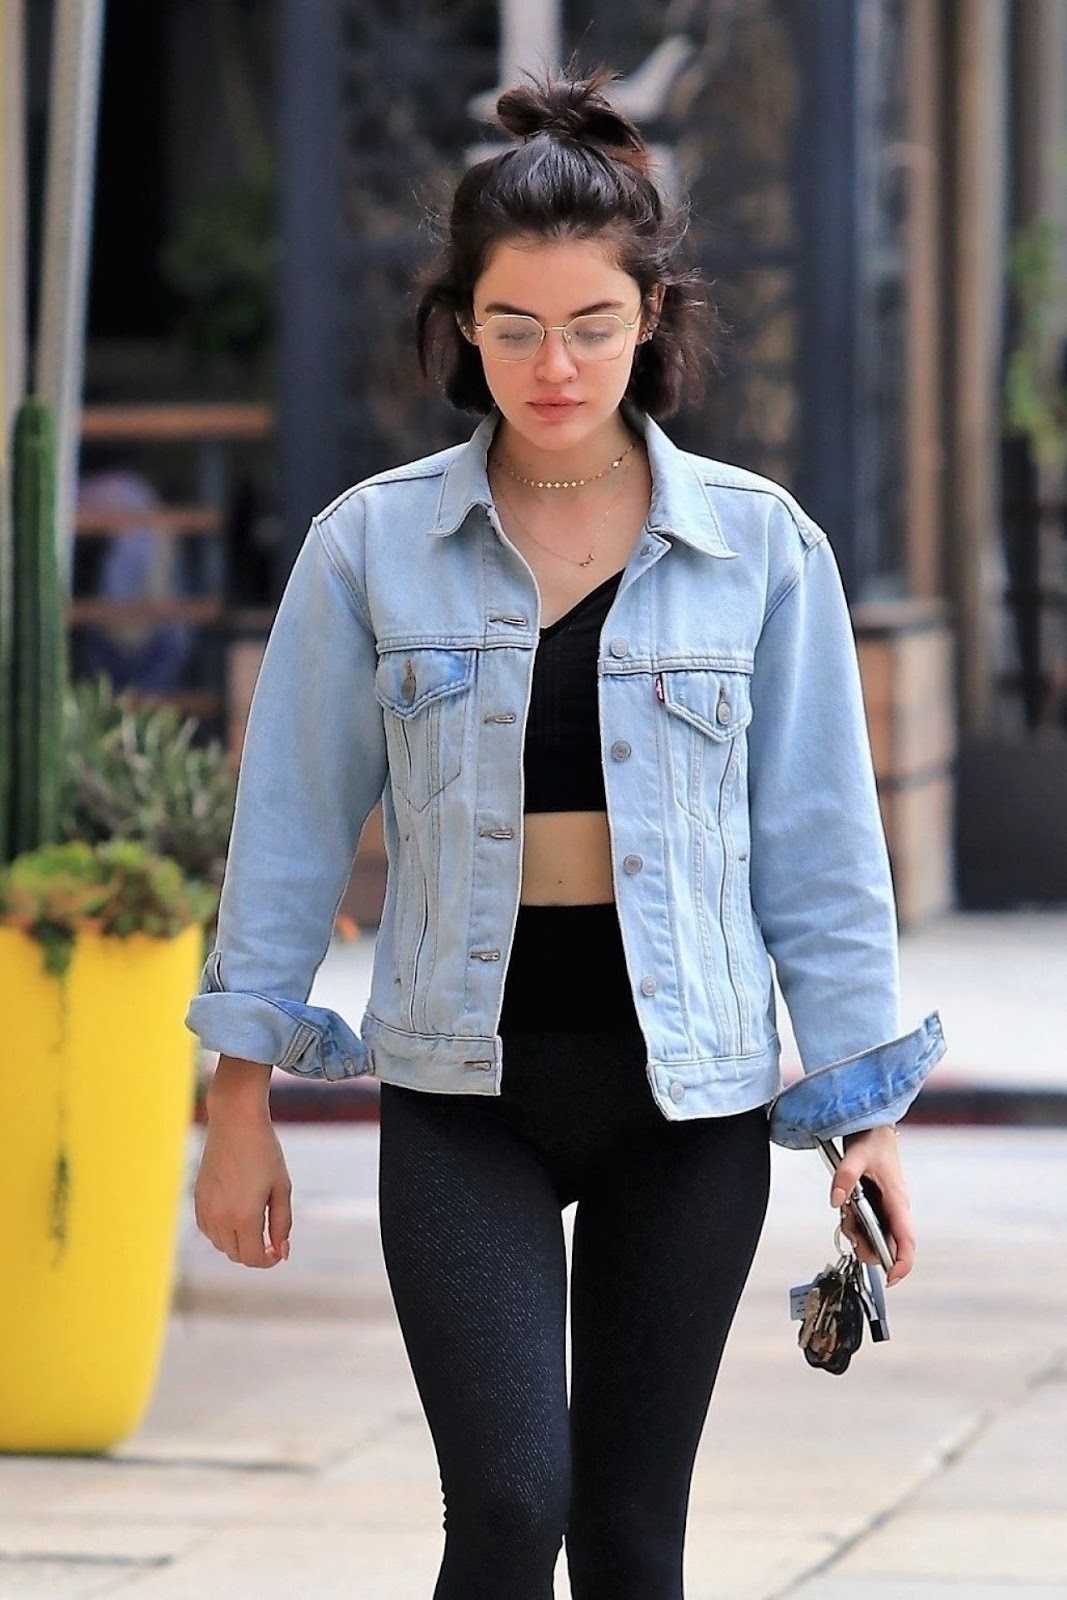 Lucy Hale Street Style in a Denim Jacket in Los Angeles